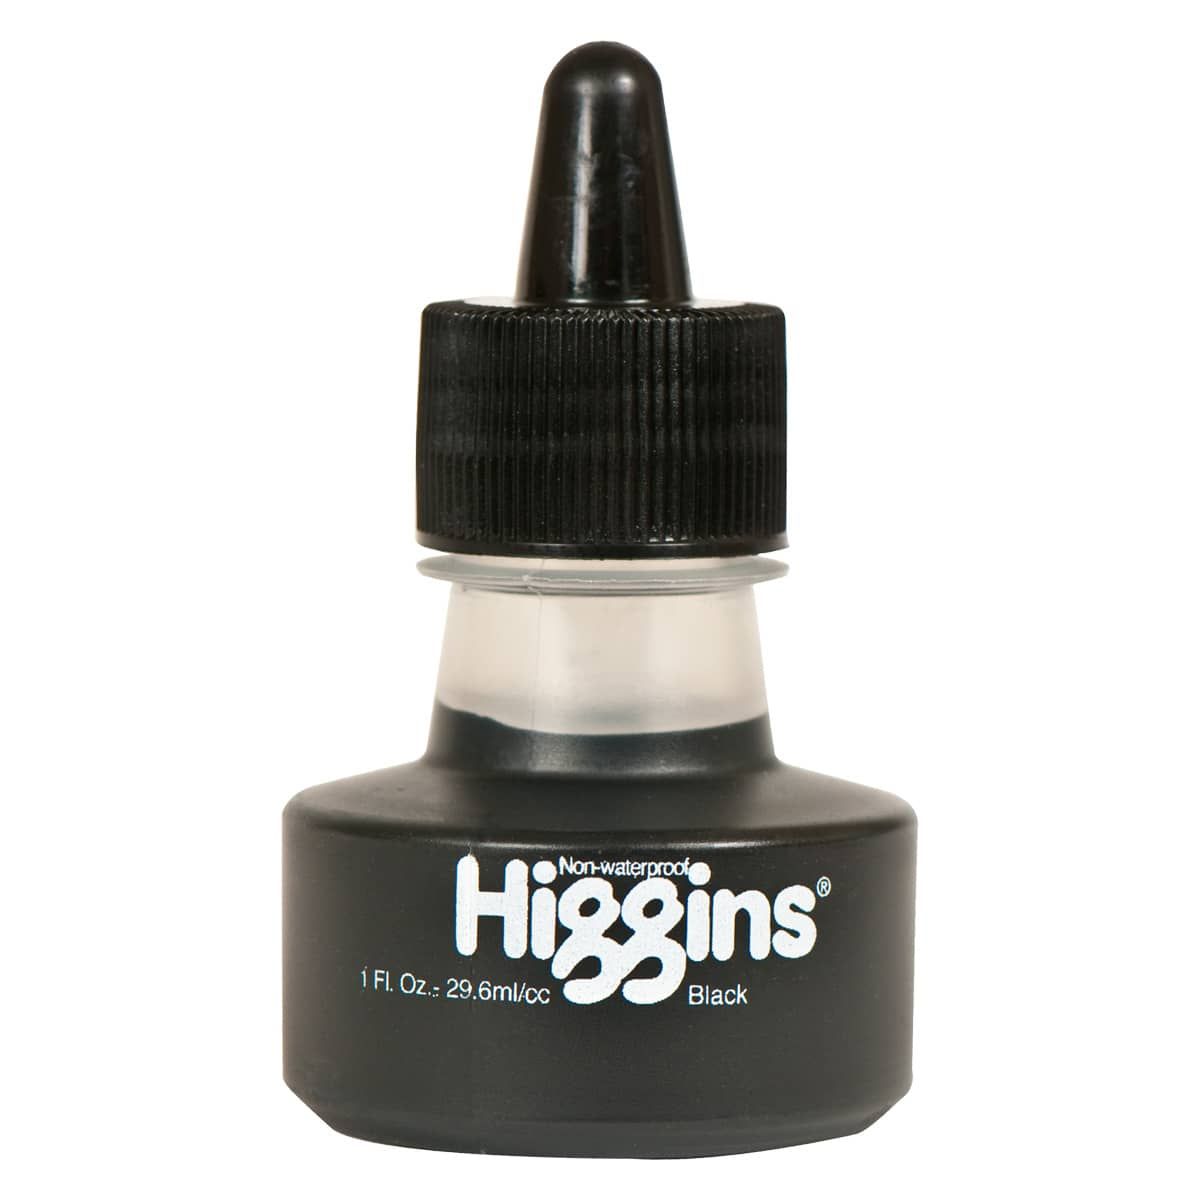 Higgins India Ink • Art Supply Guide